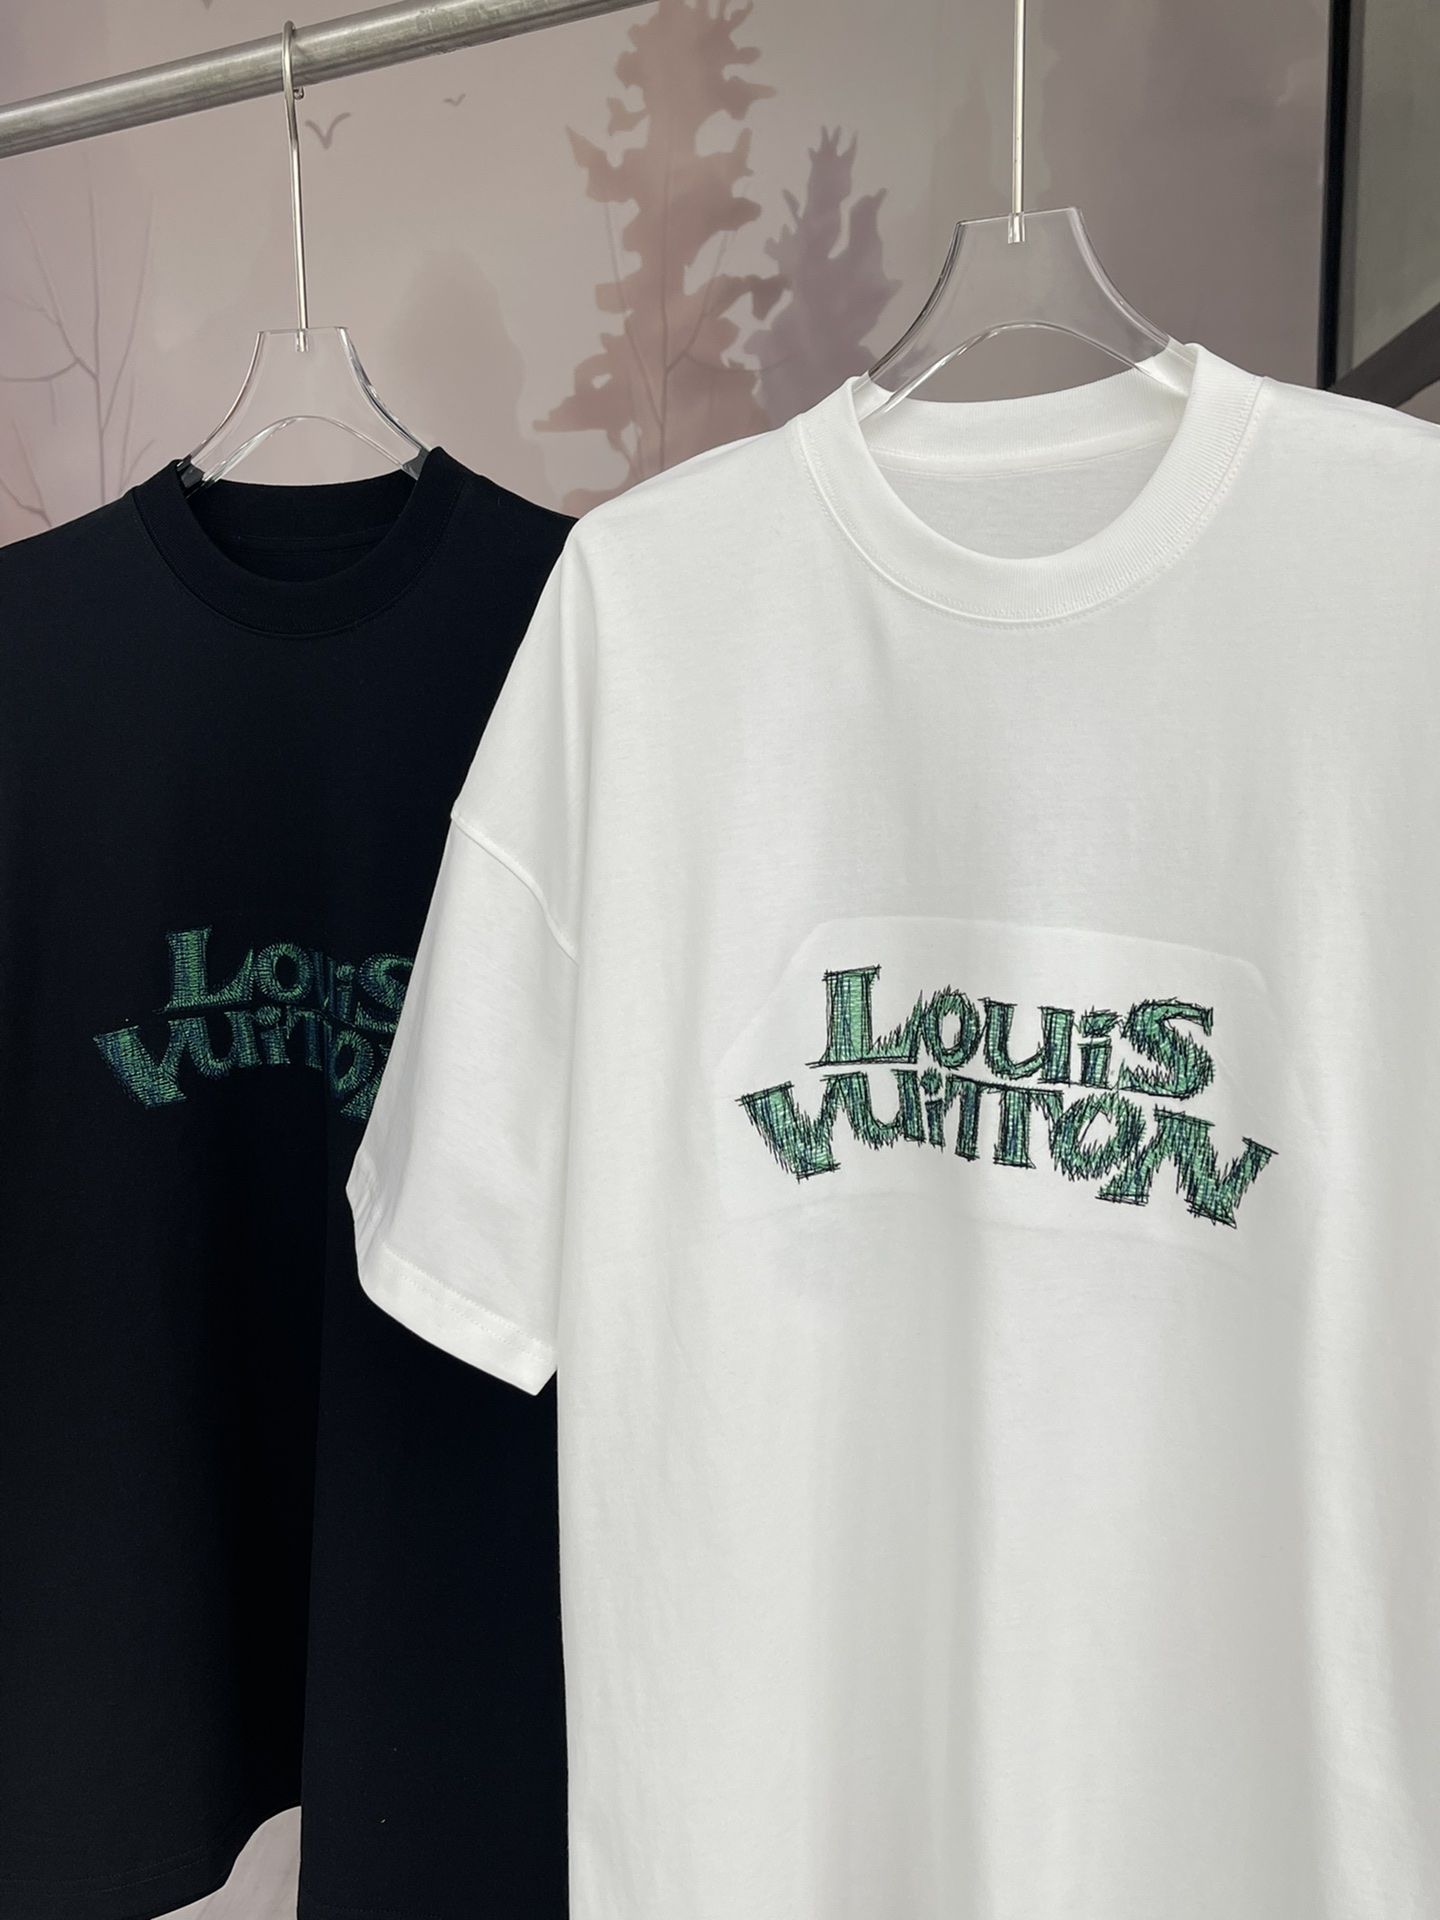 Louis Vuitton White Barcode Logo Tee – Savonches